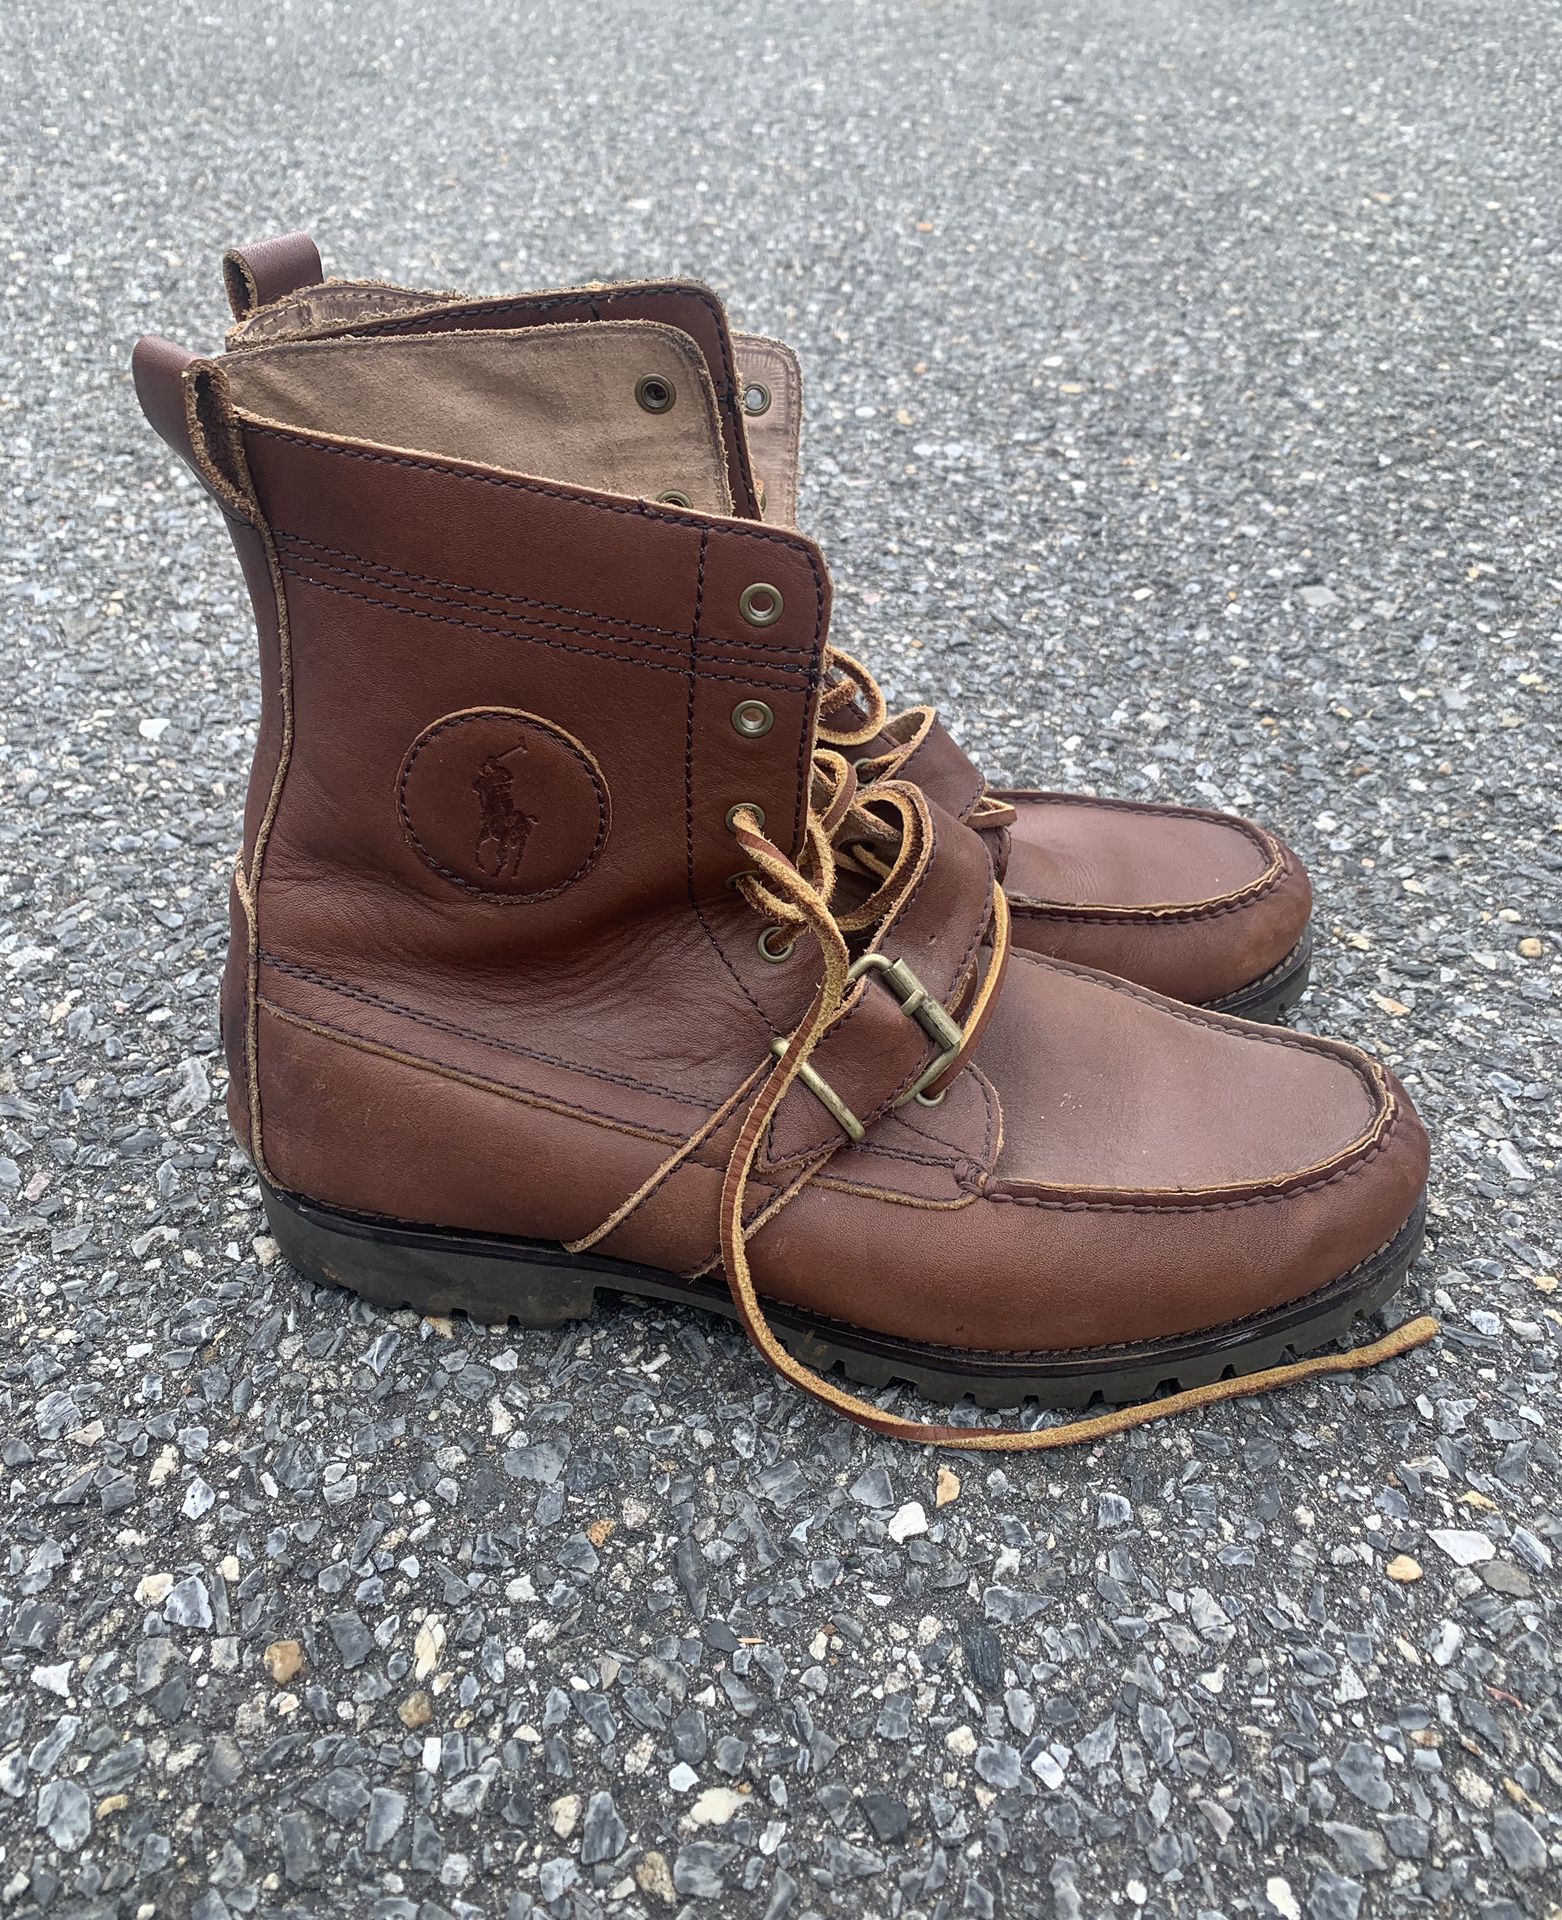 Vintage 90’s Polo Ralph Lauren Cookie Ranger Hightop Brown Leather Hiking Outdoor Boots Men’s Size 10